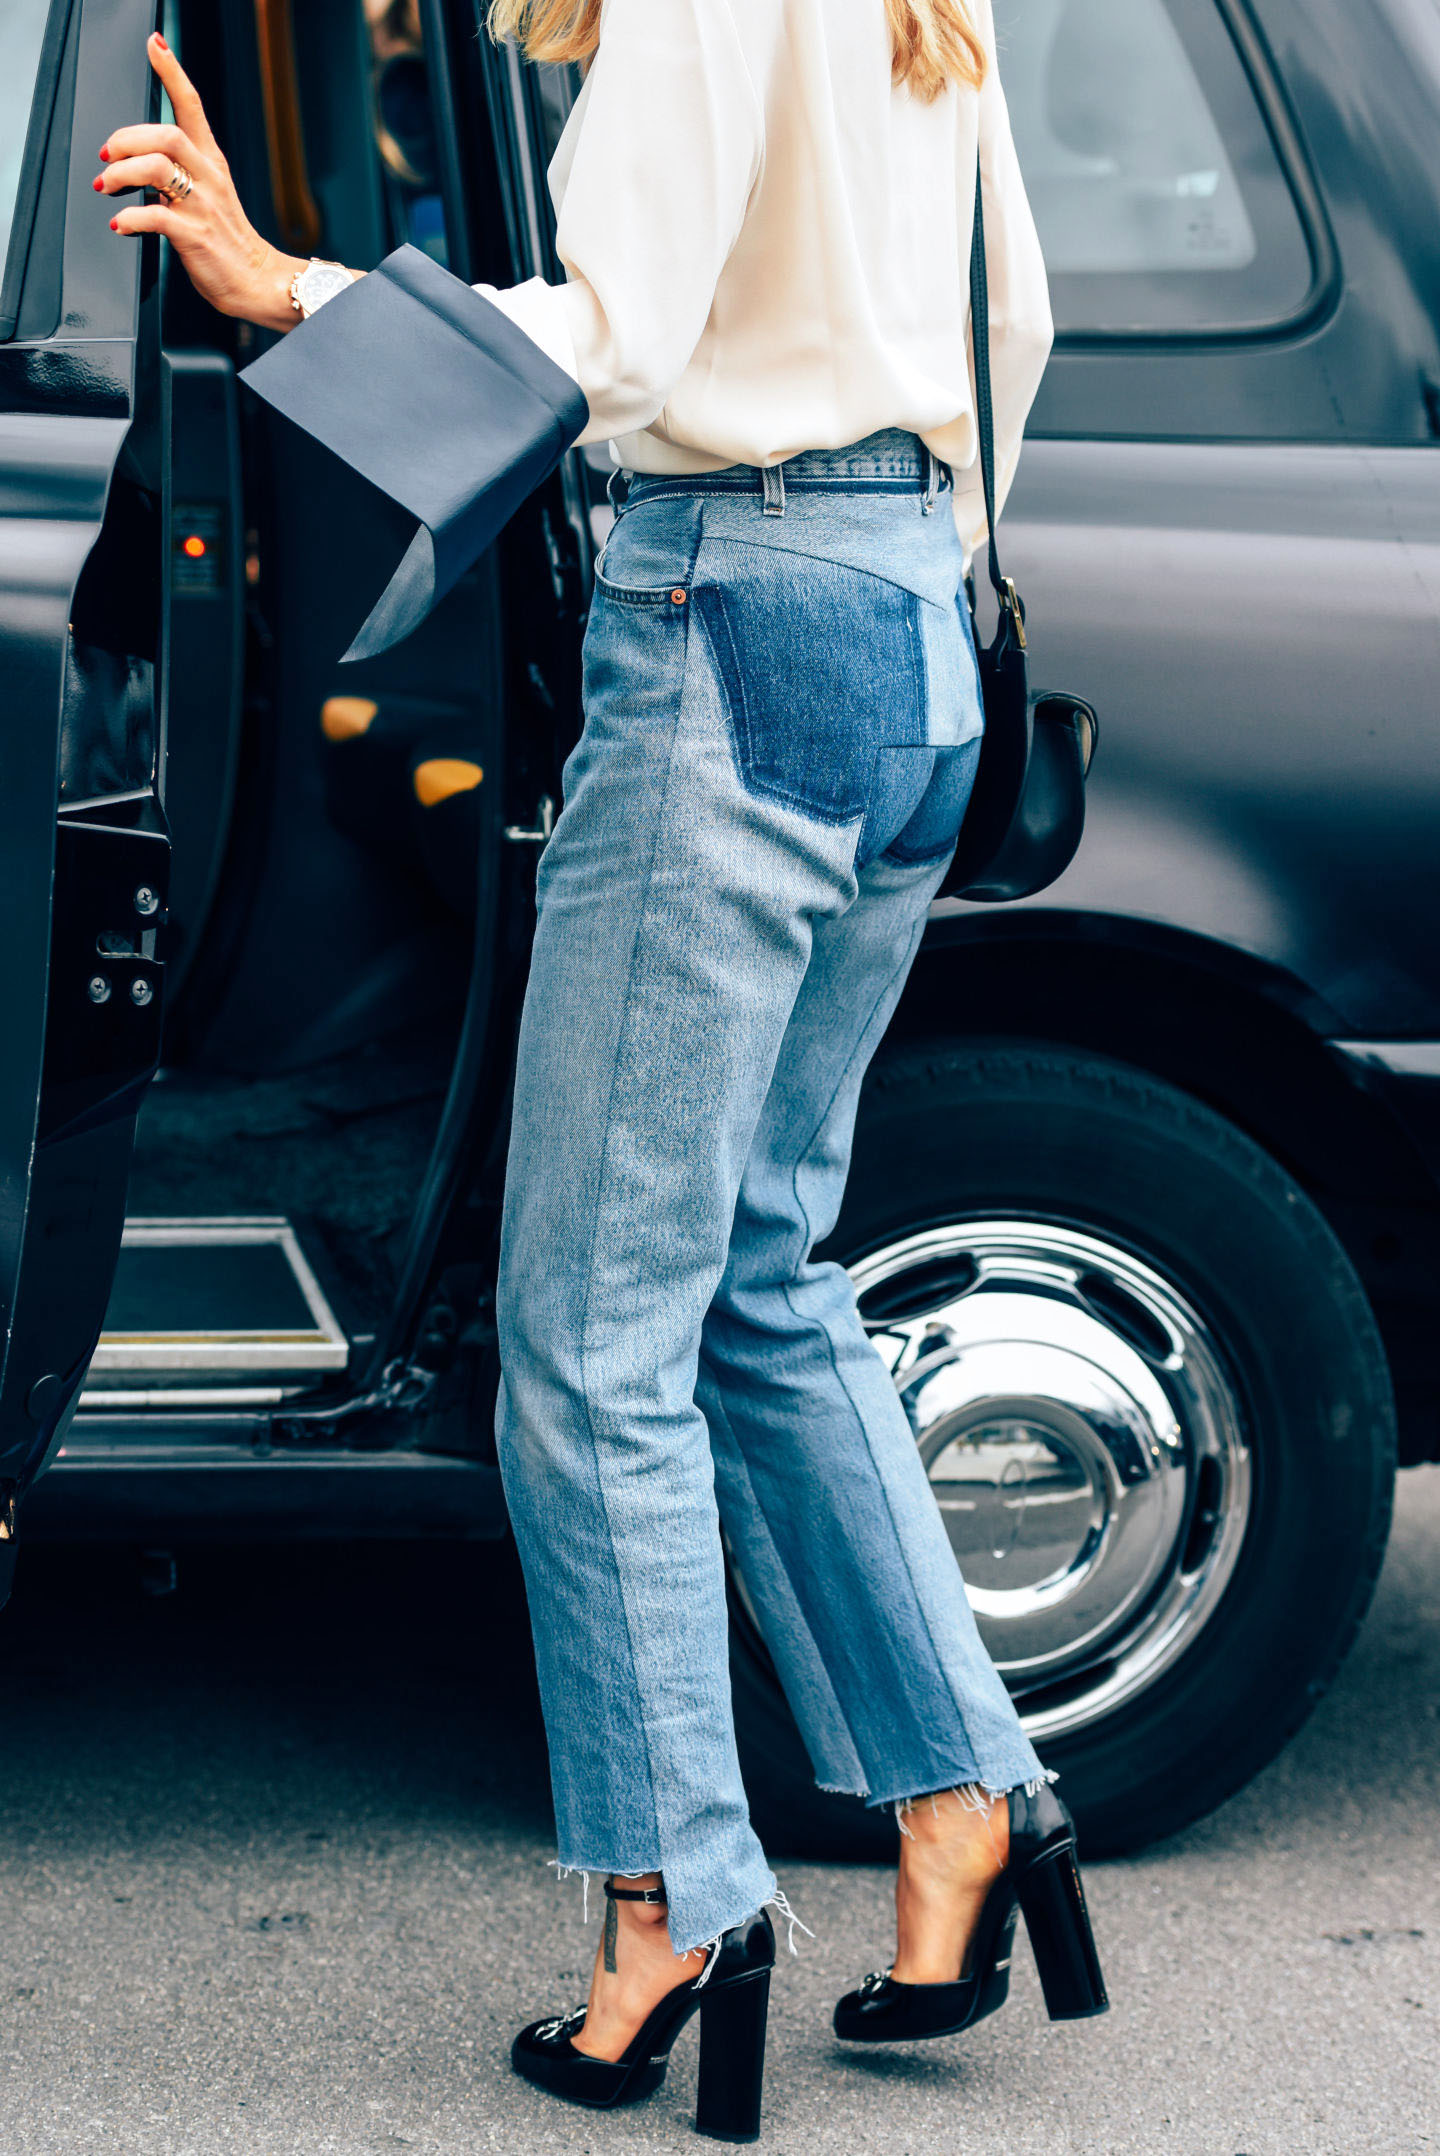 How to wear raw hem jeans like a street style star